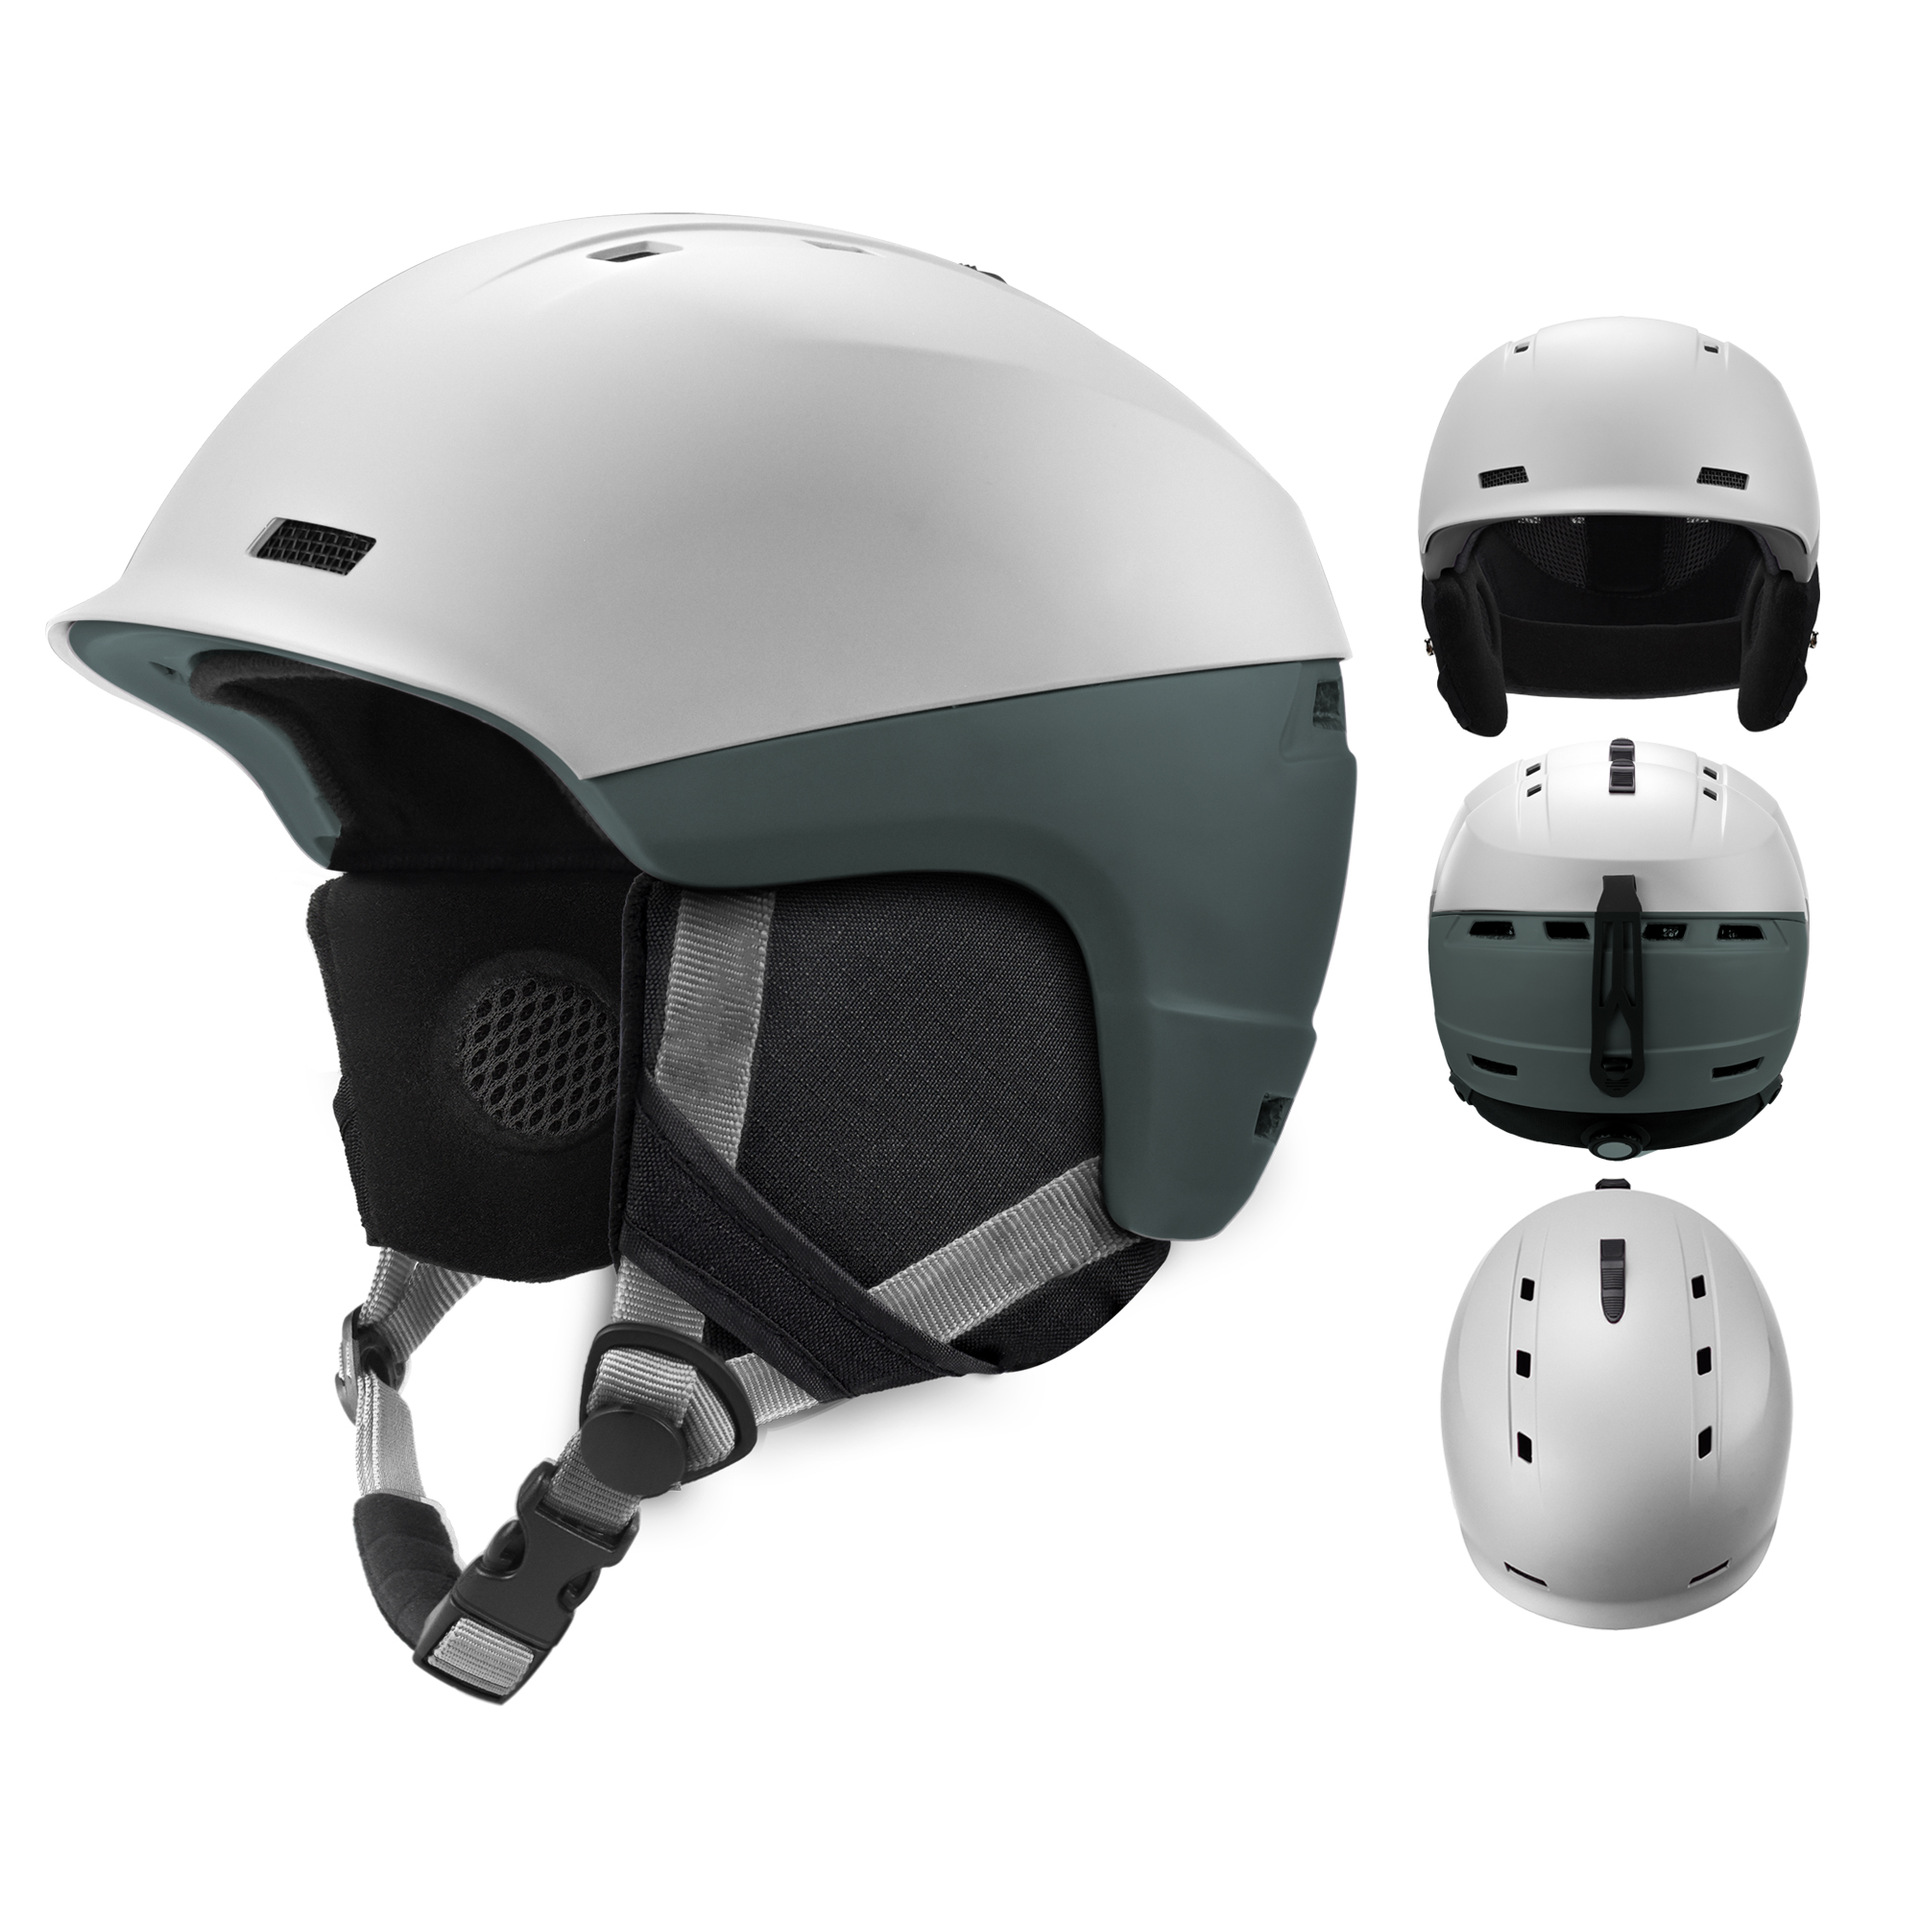  Ski Helmet for Adults Impact Resistant ABS Shell & EPS Foam